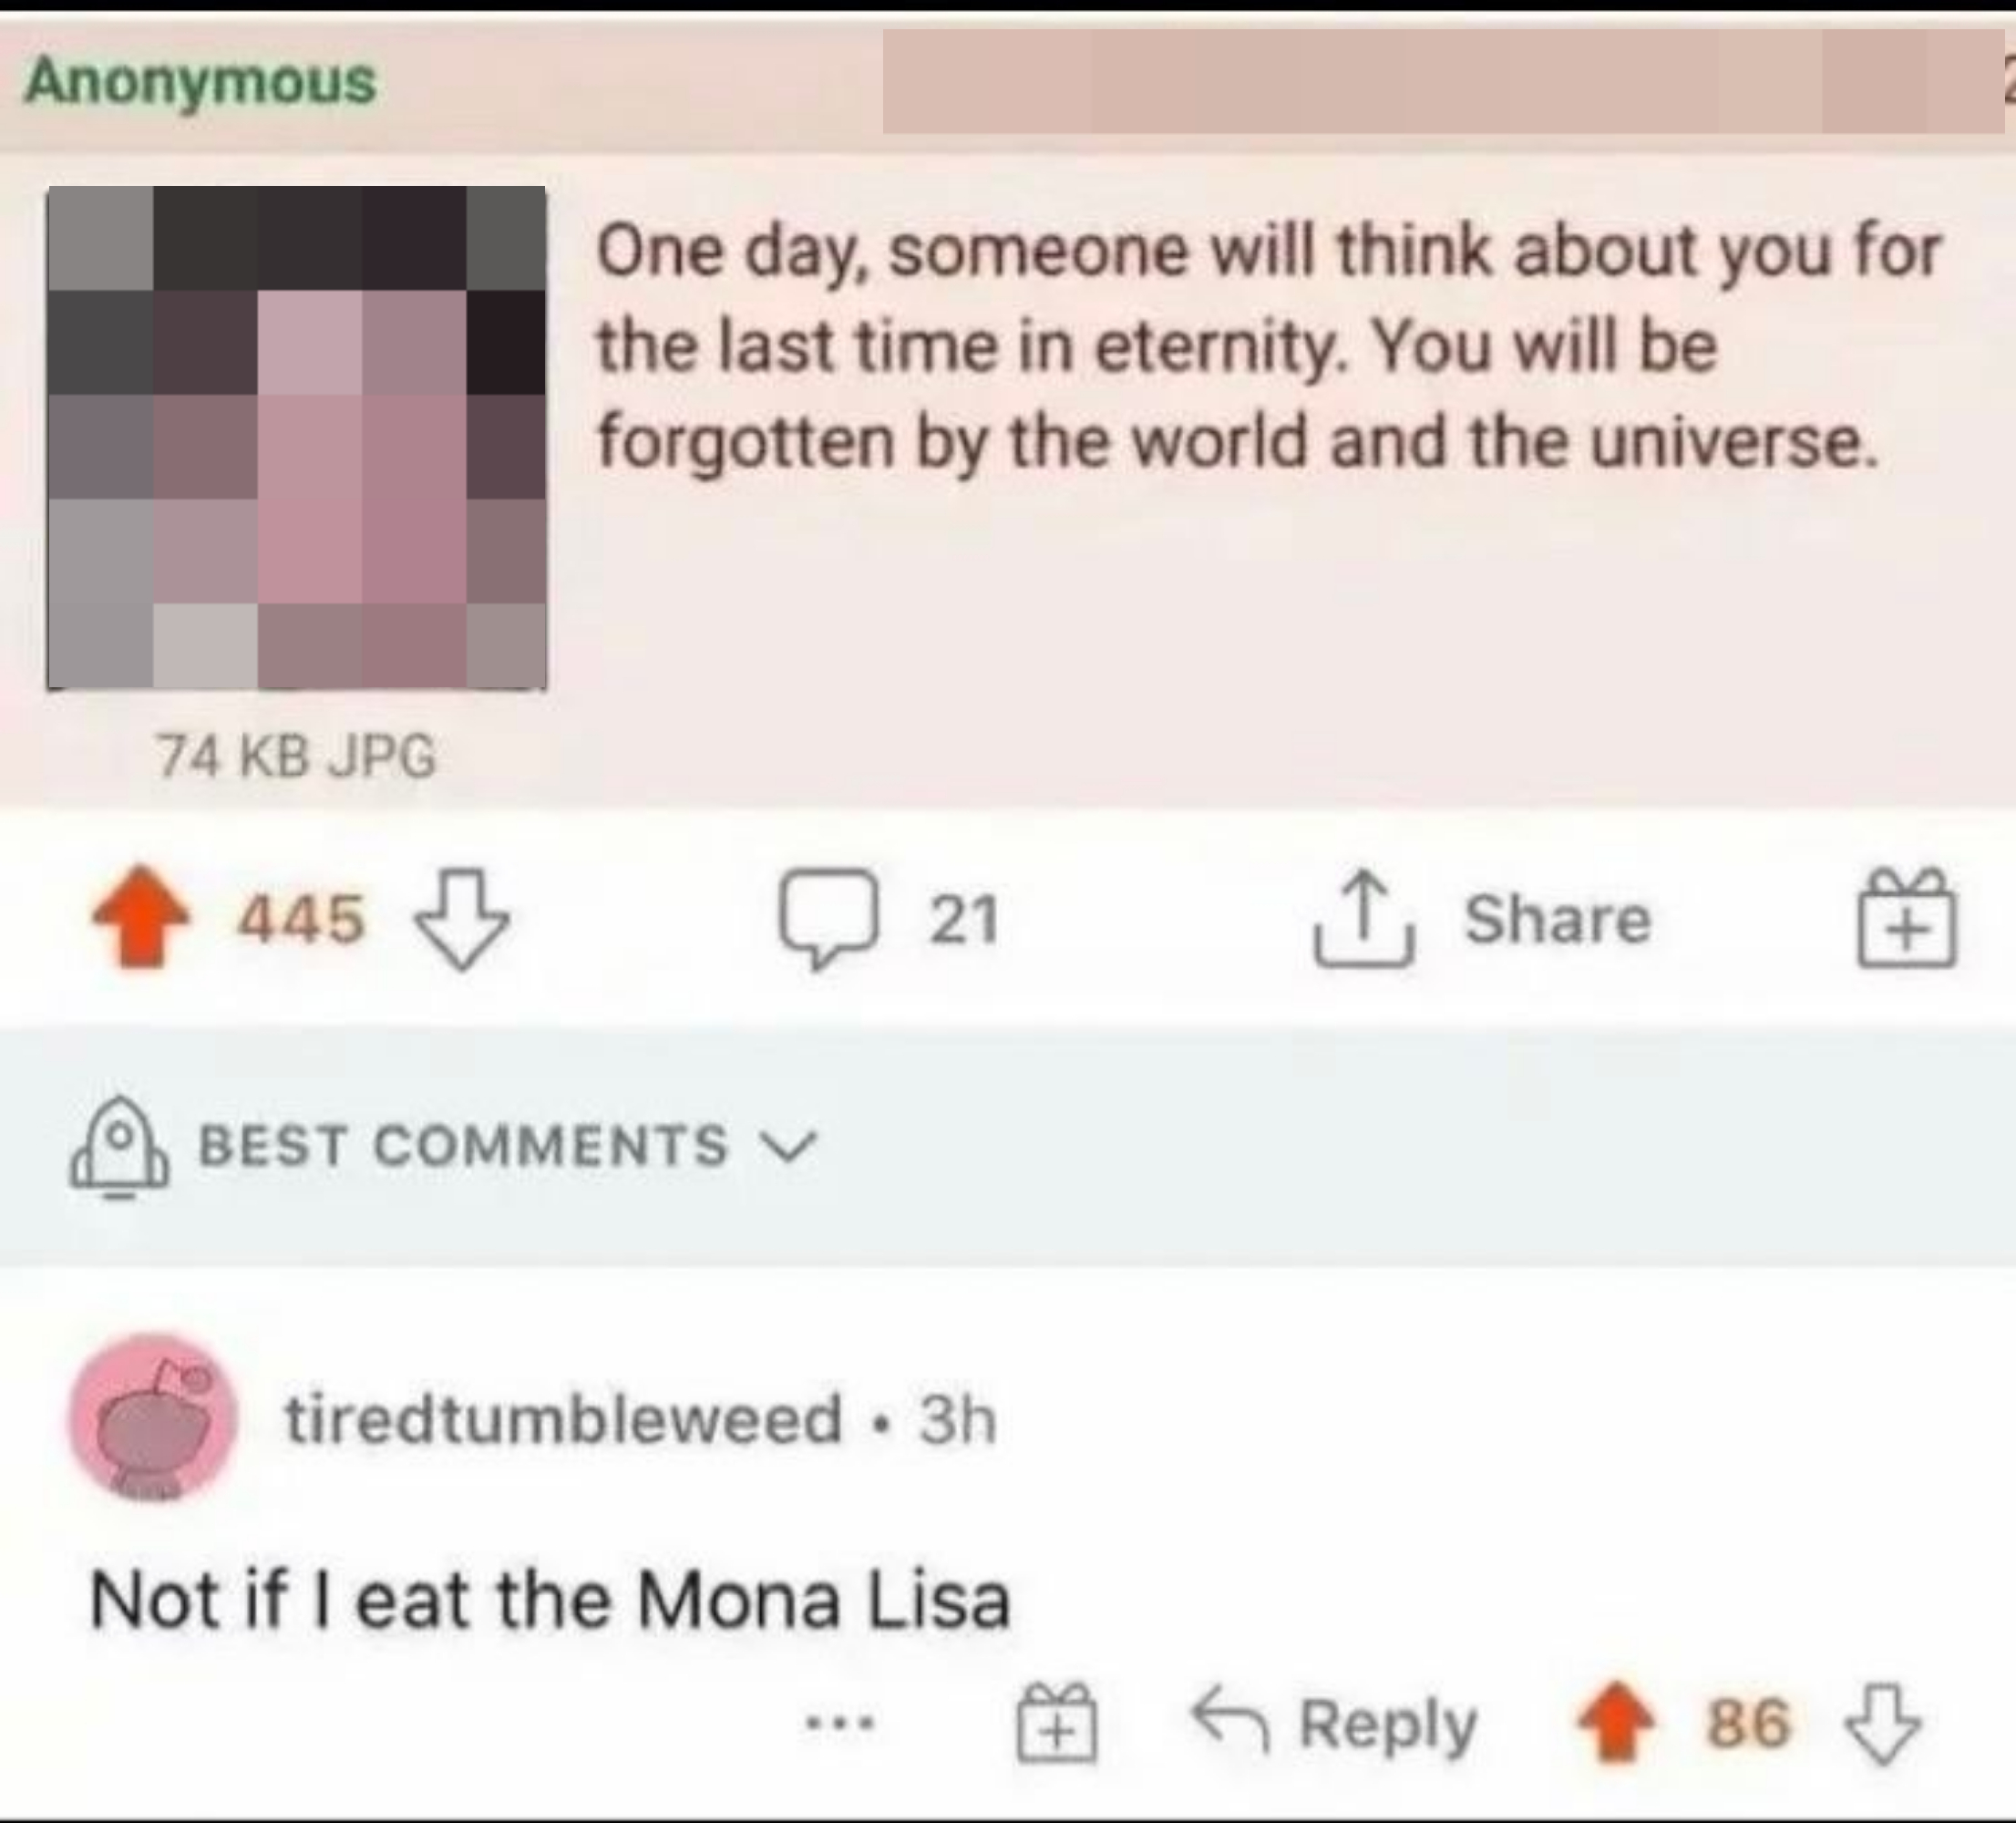 &quot;Not if I eat the Mona Lisa&quot;